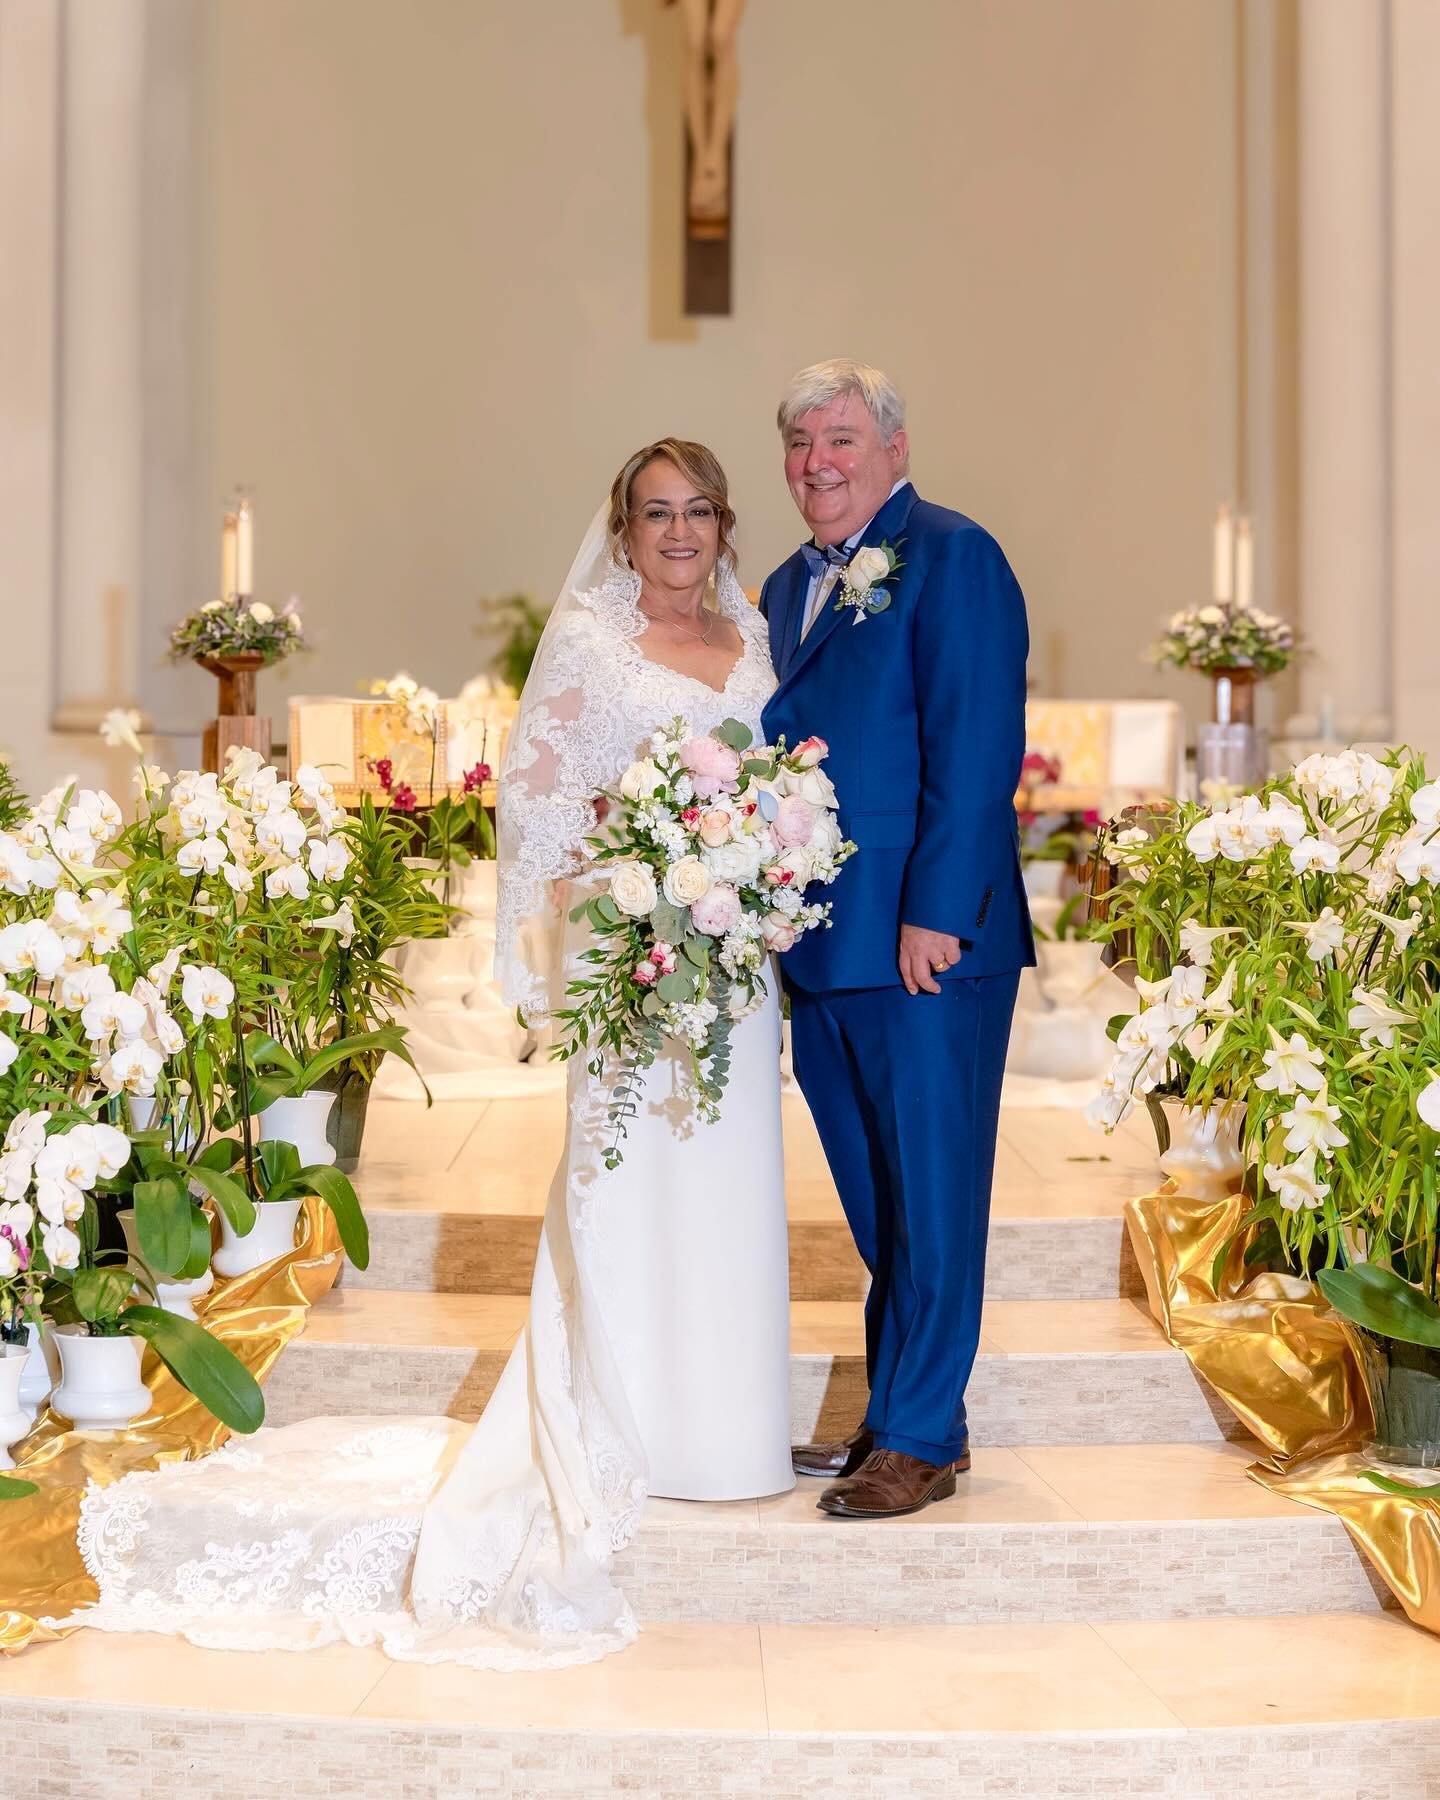 Congratulations David &amp; Adaileen, may God Bless you always! 💒🙏🏽❤️

#acevedophotography  #stjohncatholicchurch #grandmanor #justmarried❤️ #love #weddingday #spacecoastphotographers